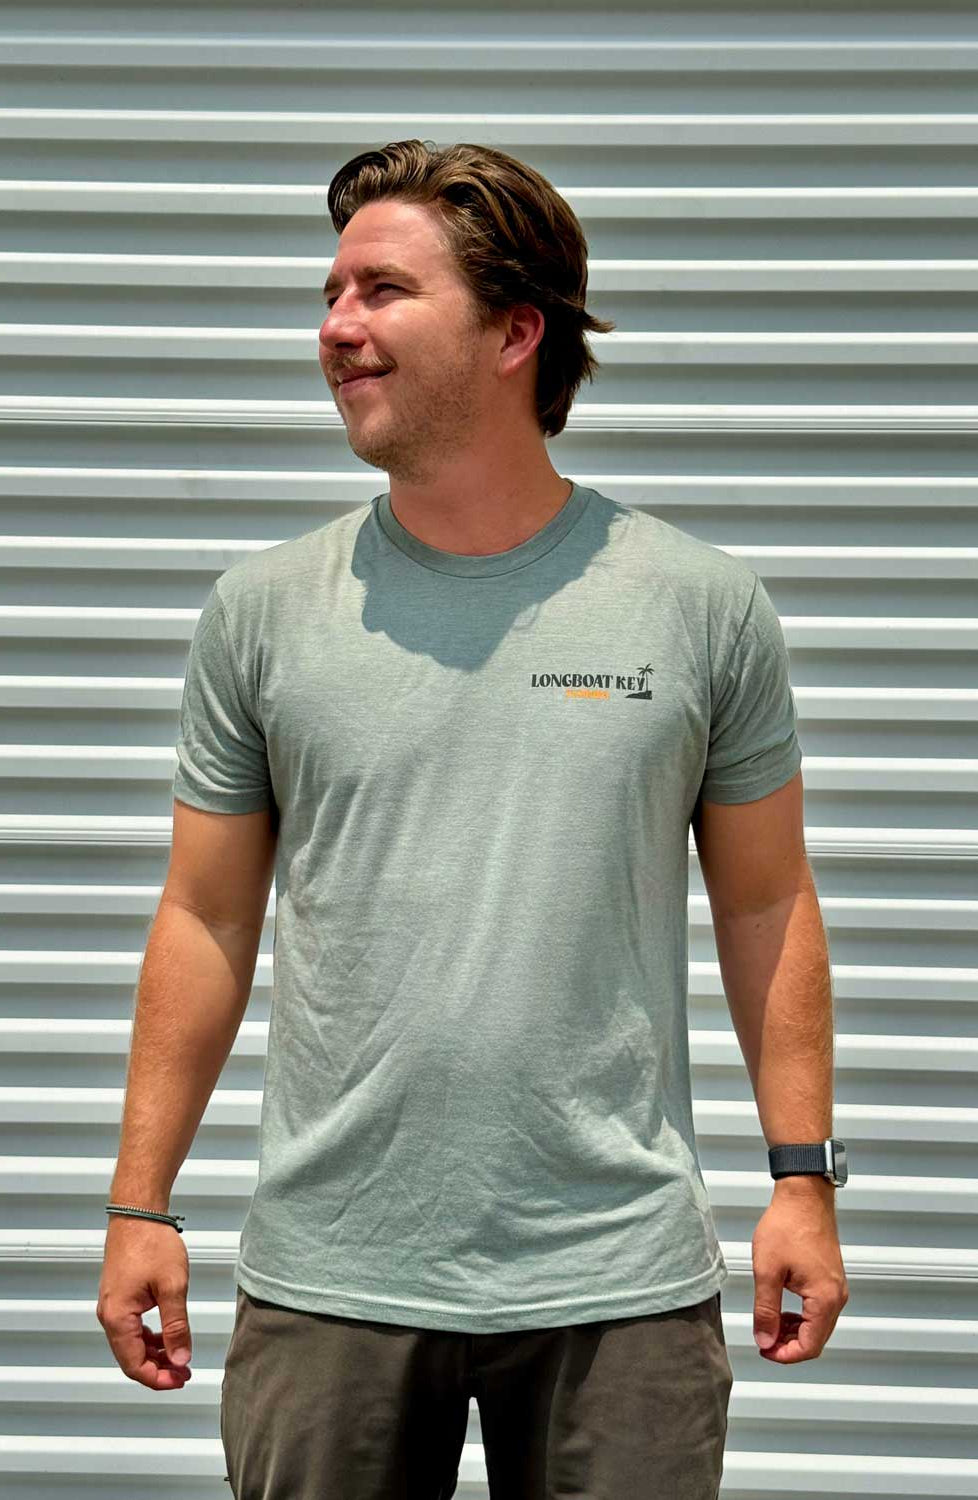 Techstyles: Men's Process Longboat Key Tri-Blend Crew T-shirt